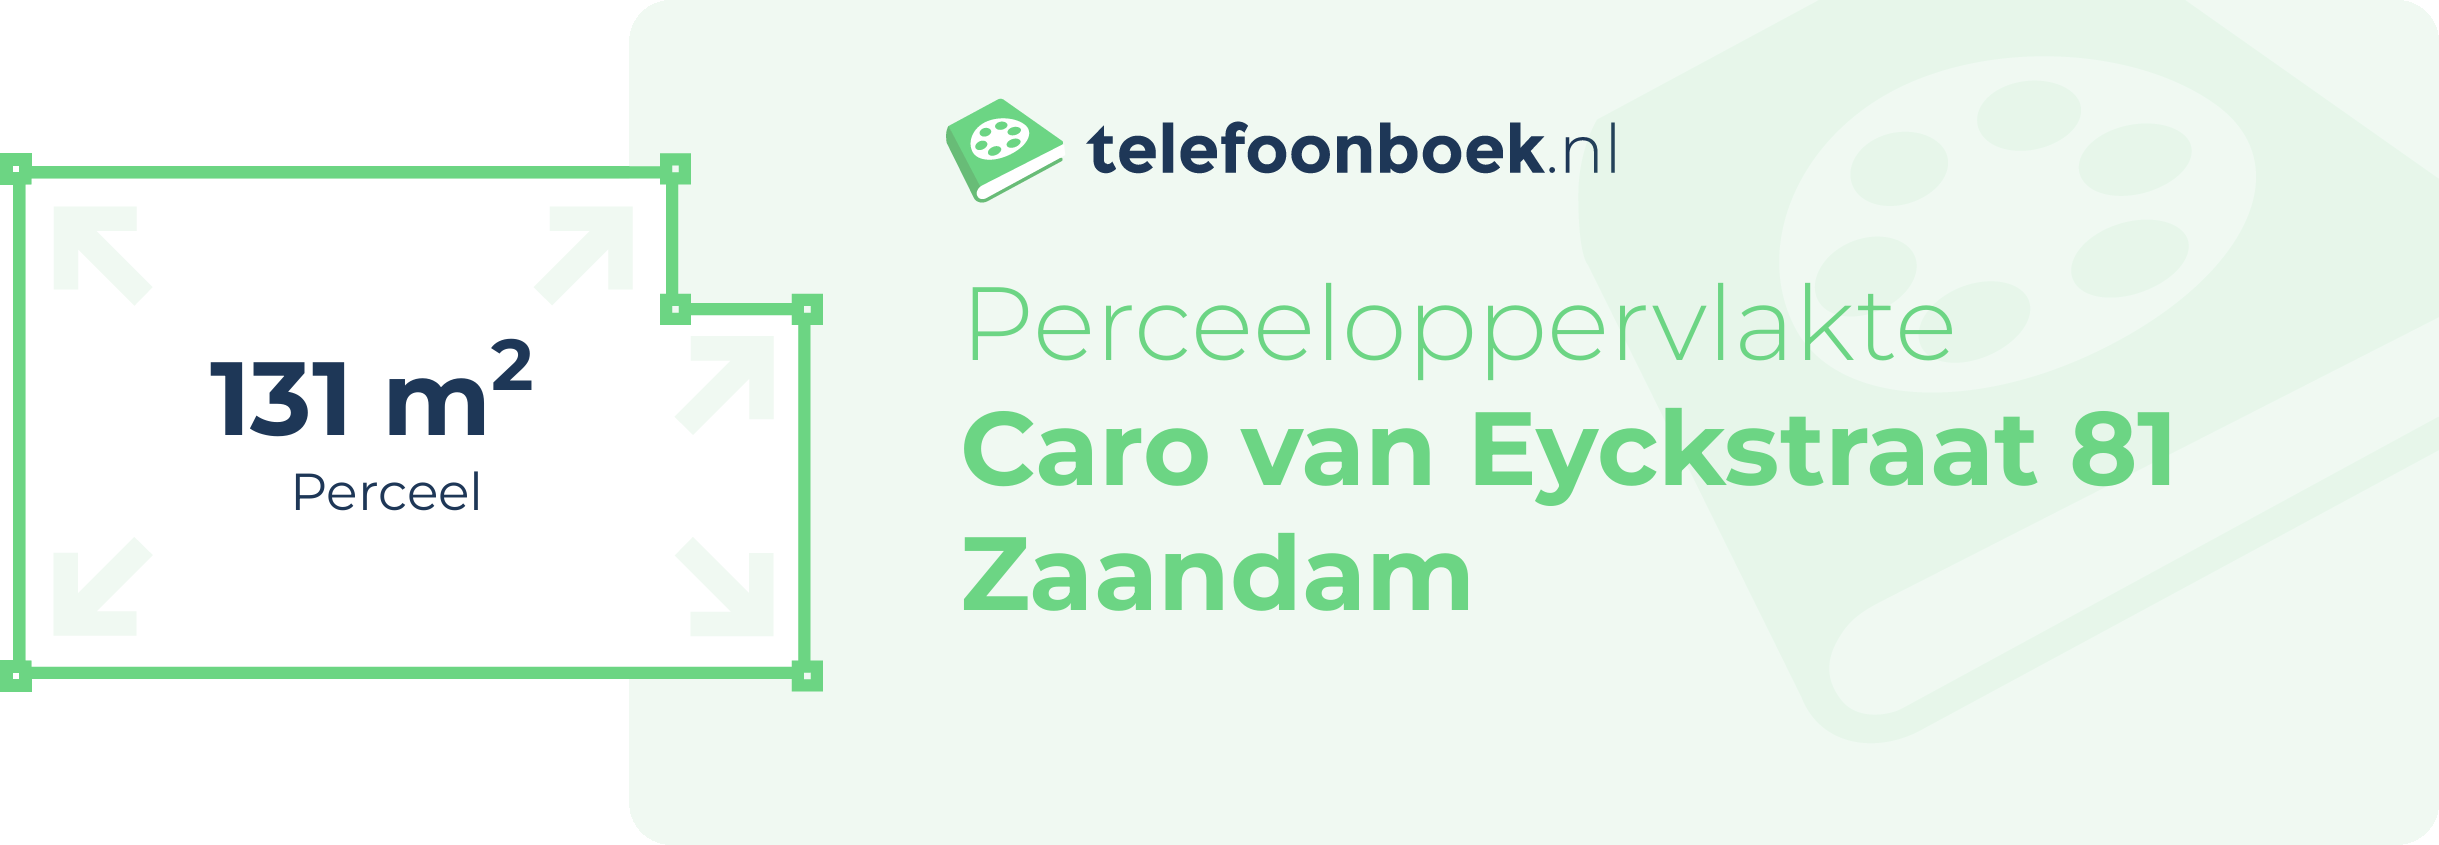 Perceeloppervlakte Caro Van Eyckstraat 81 Zaandam